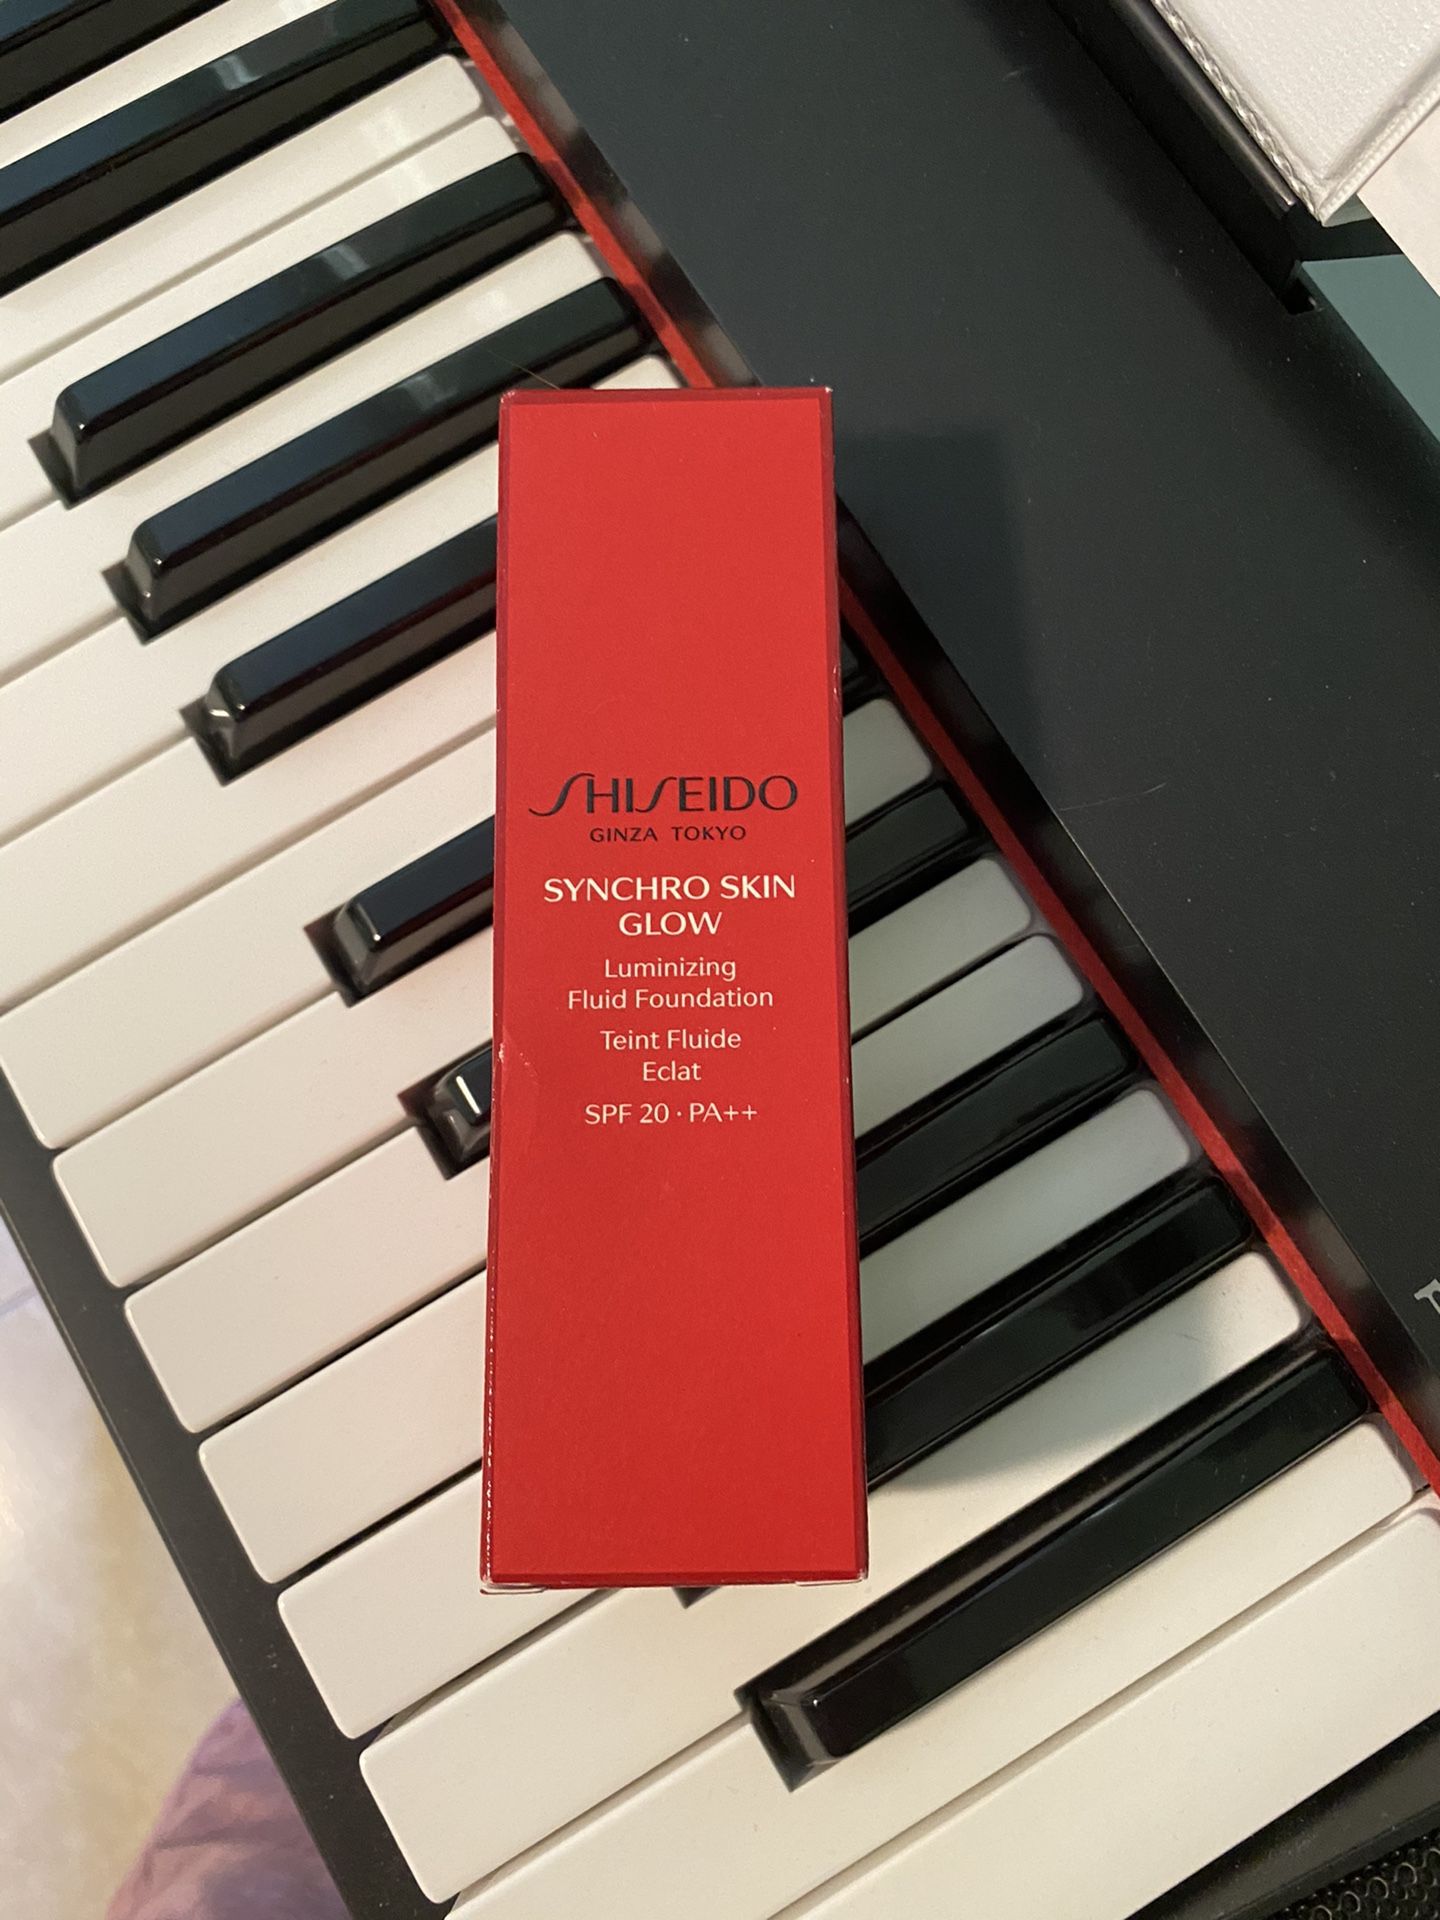  Shiseido Synchro Skin Glow Luminizing Fluid Foundation Spf 20, Gloden 2 - Original - Made in Japan